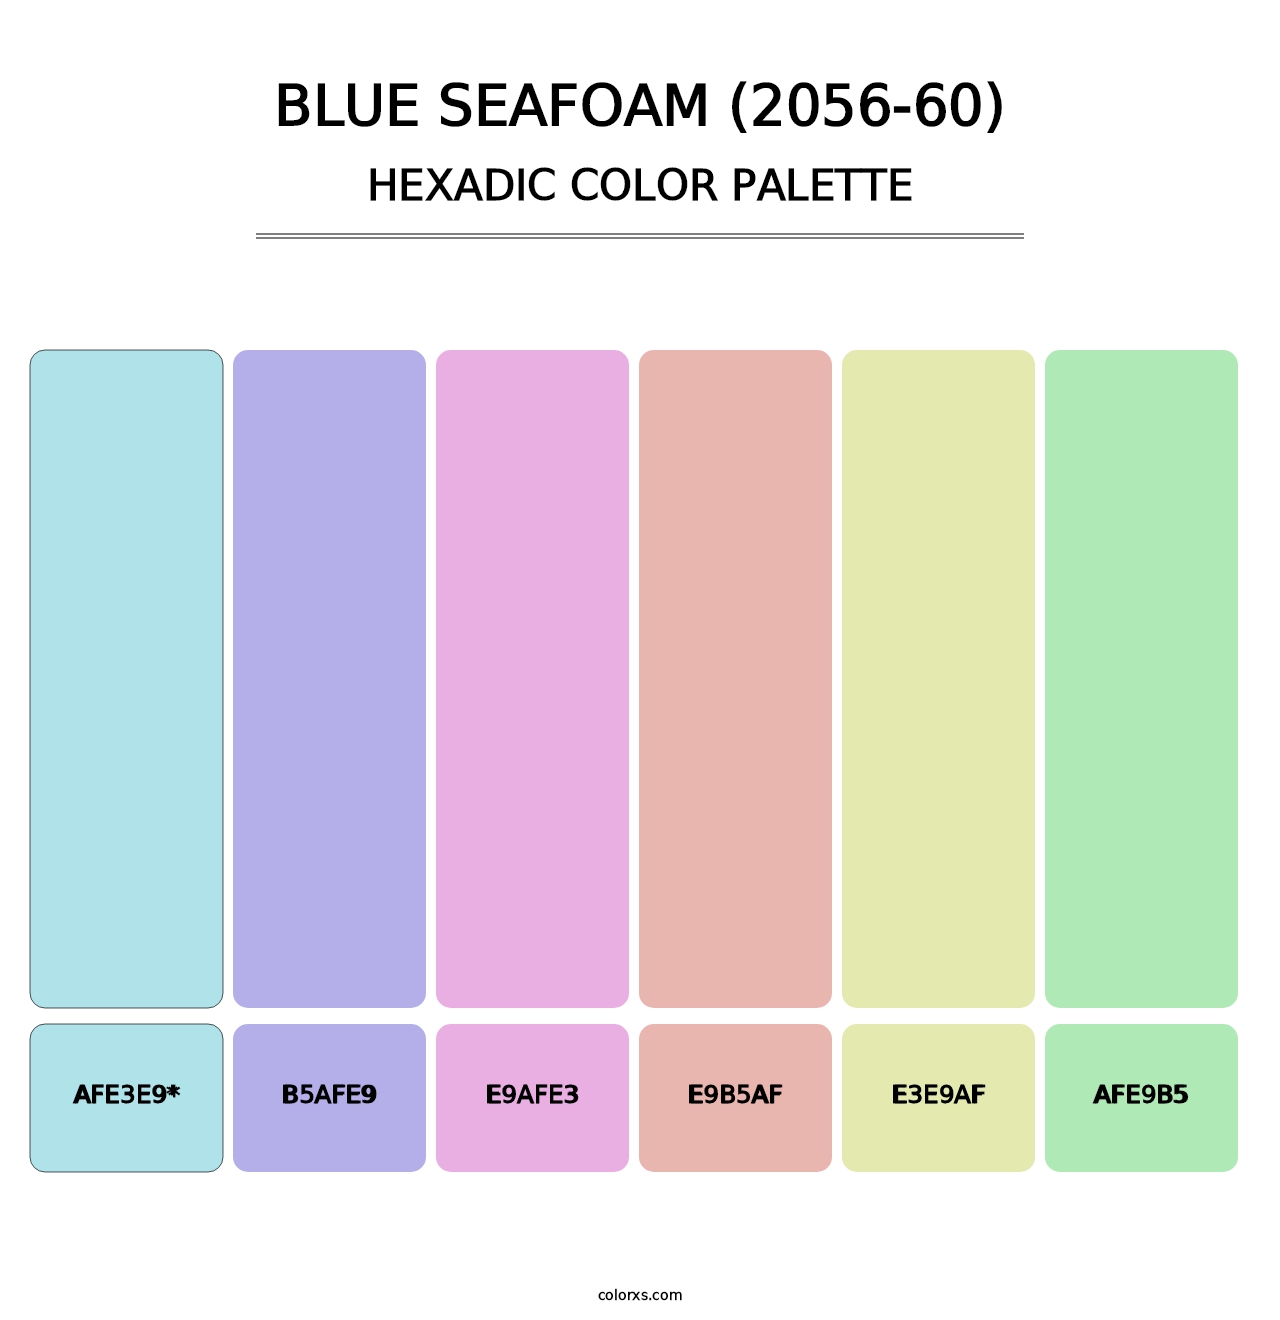 Blue Seafoam (2056-60) - Hexadic Color Palette